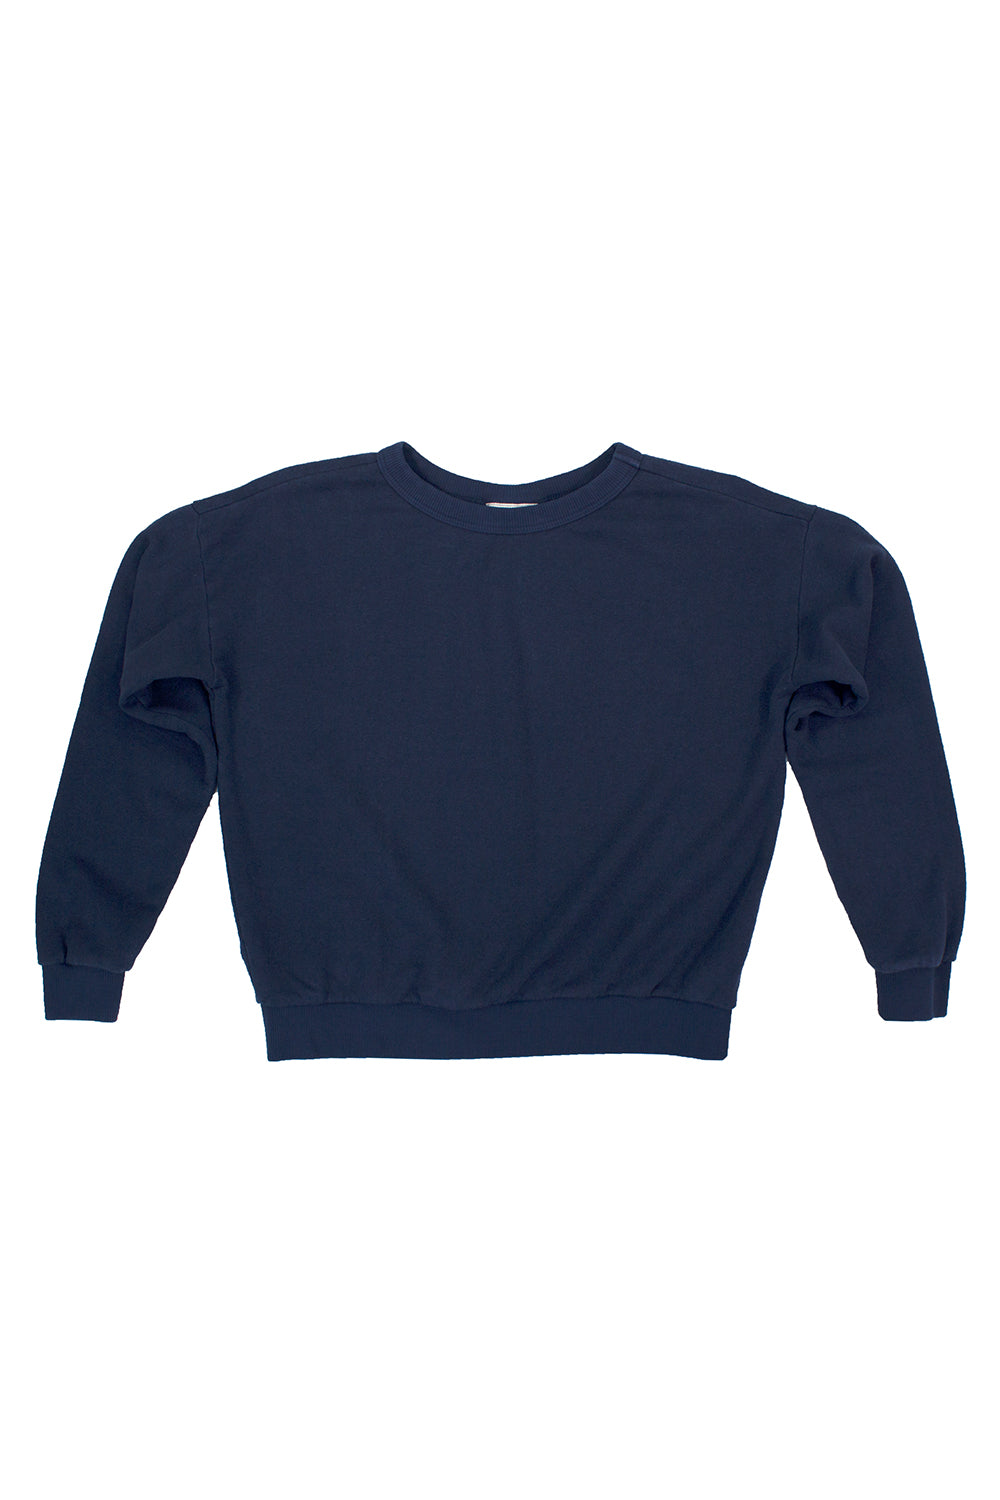 Crux Cropped Sweatshirt | Jungmaven Hemp Clothing & Accessories / Color: Navy